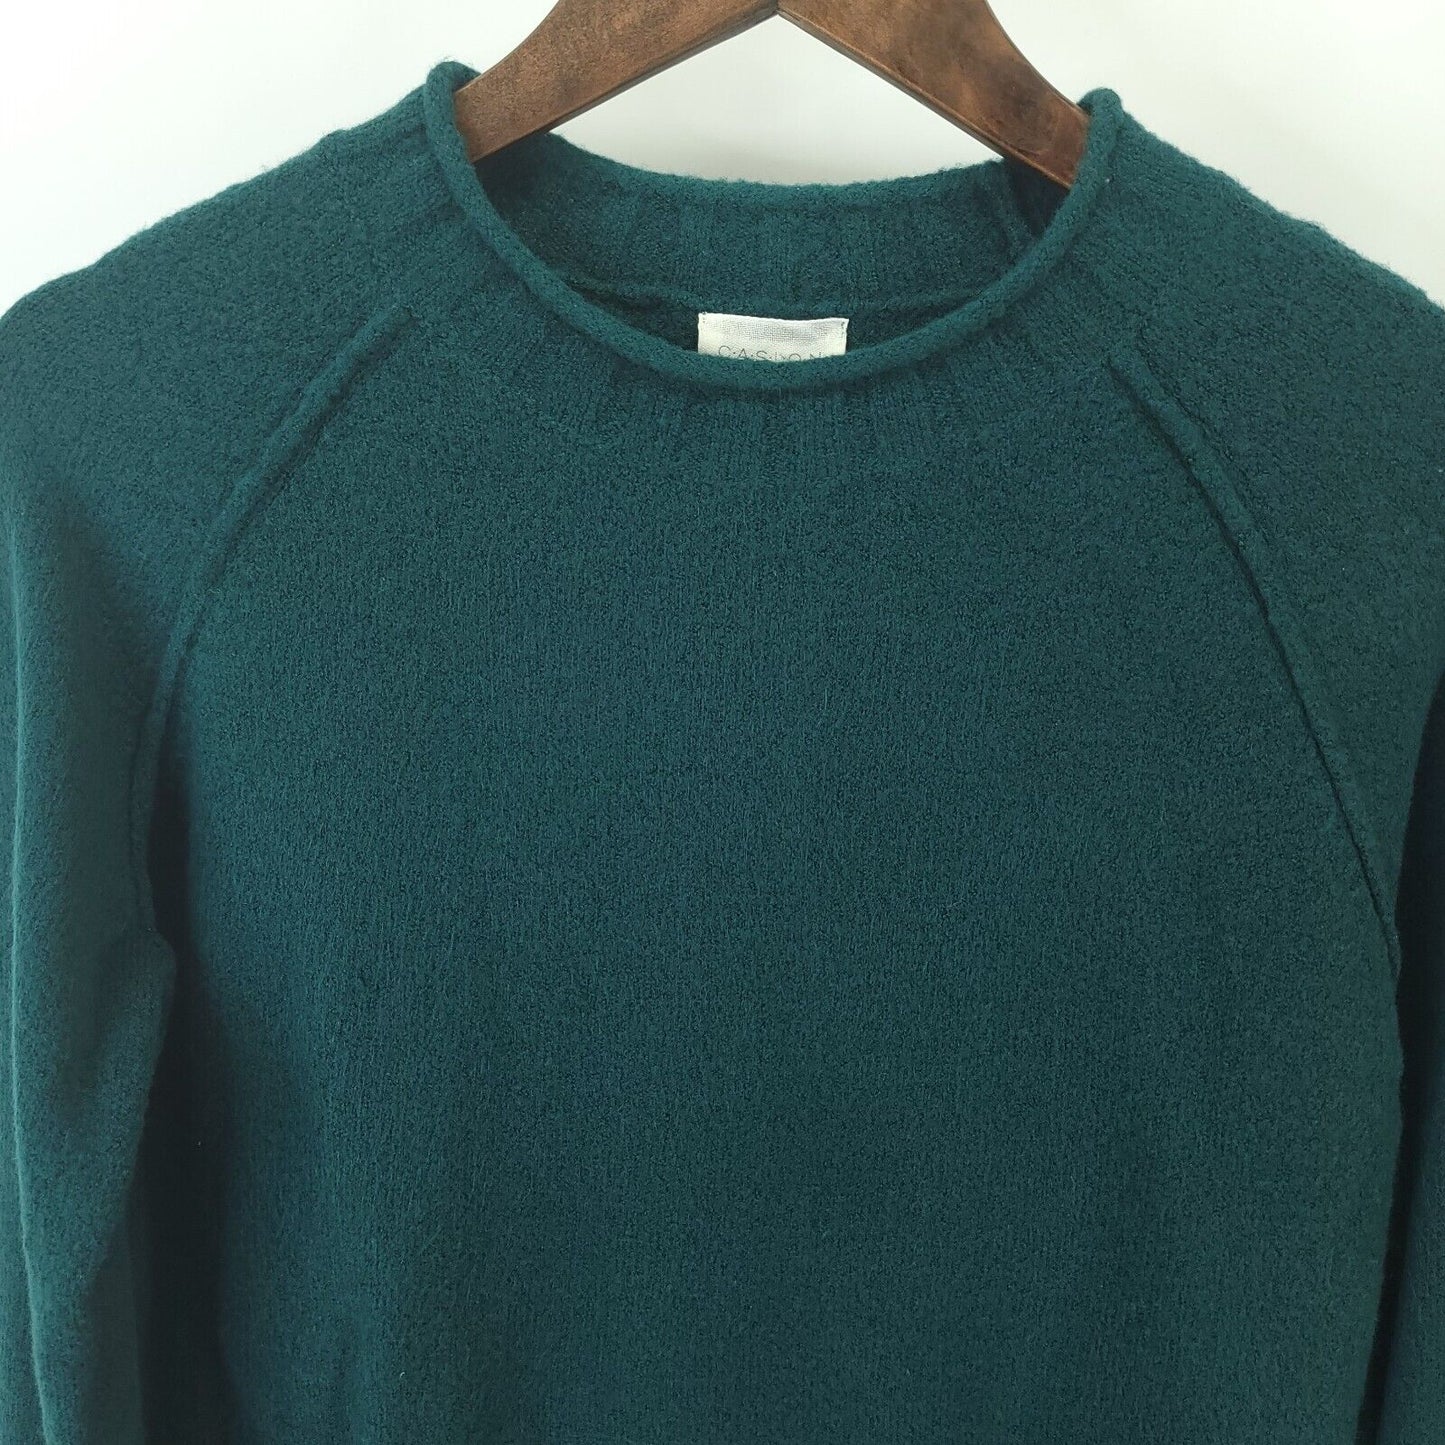 Caslon long sleeve sweater size XS